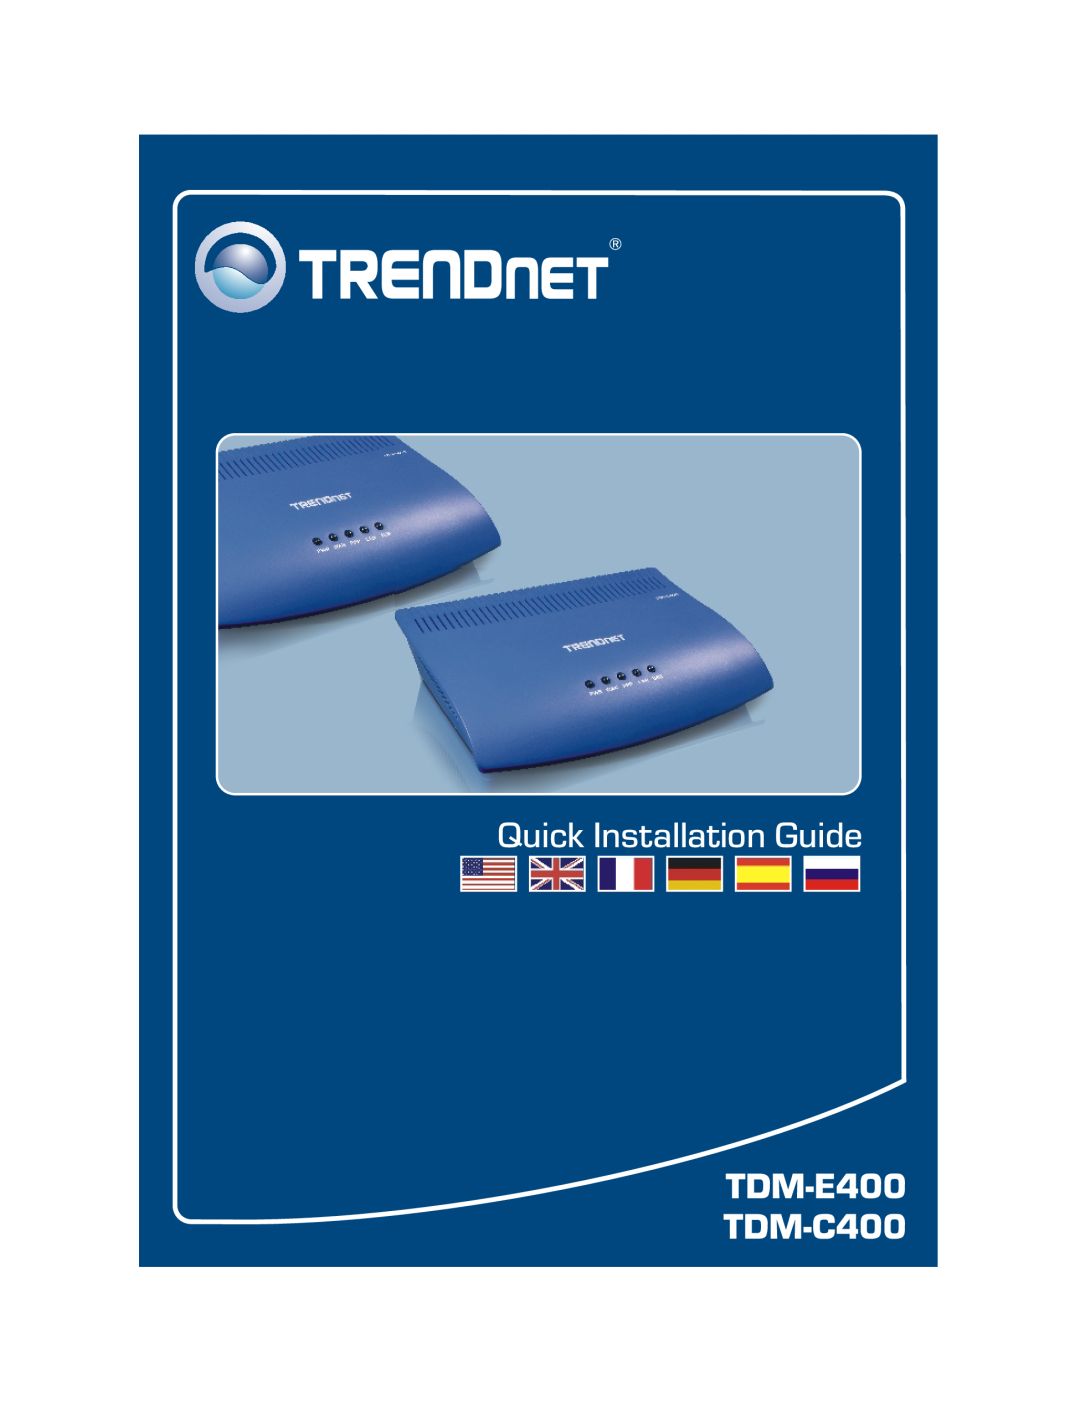 TRENDnet manual Quick Installation Guide, TDM-E400 TDM-C400 